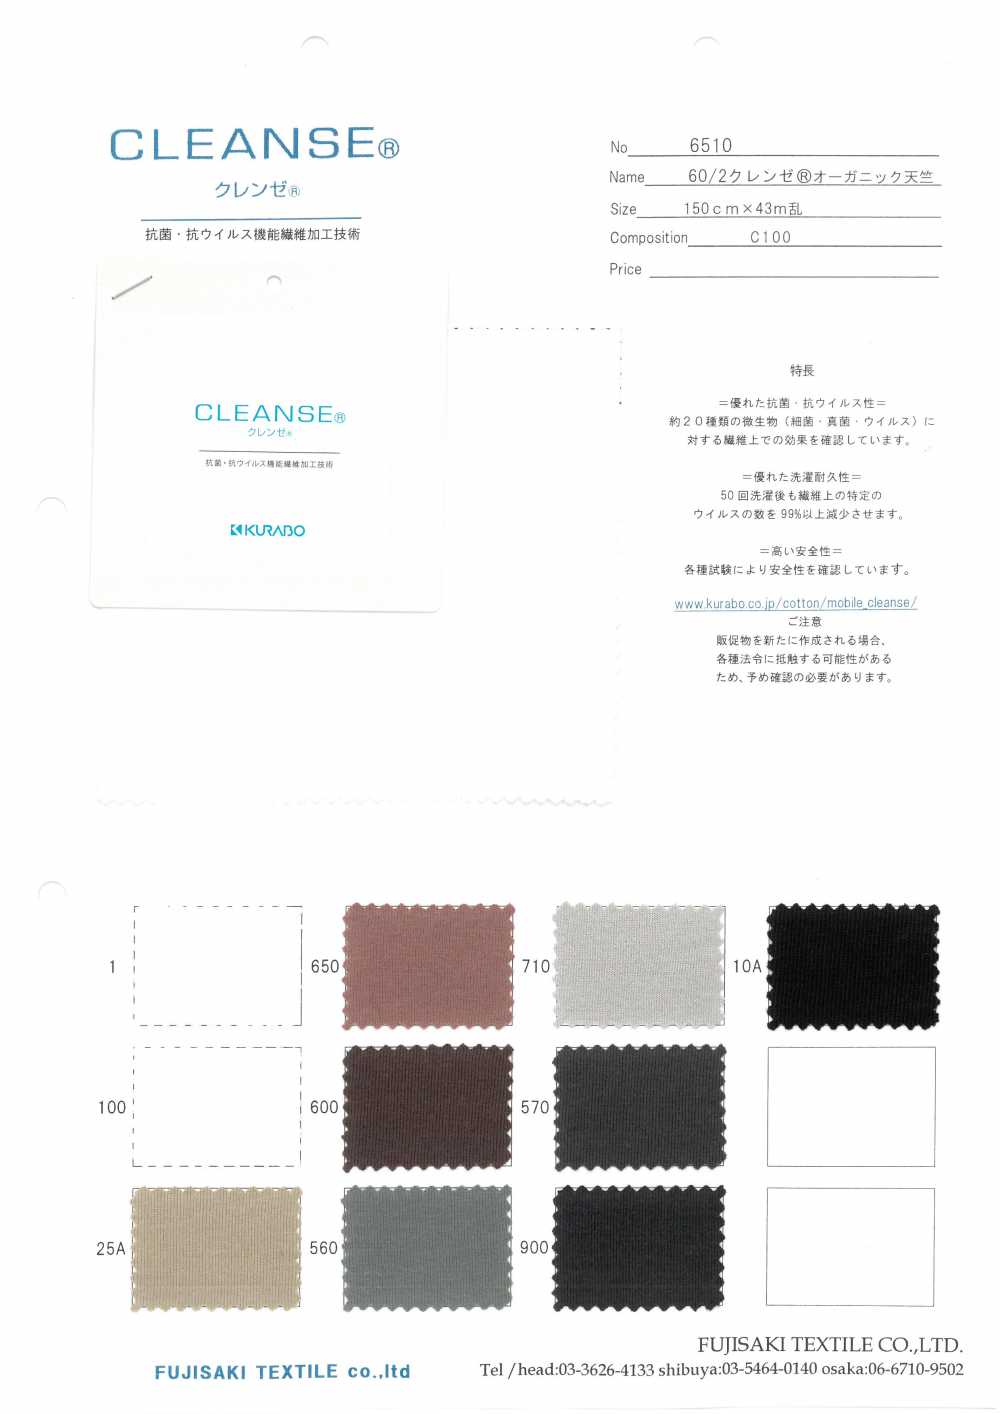 6510 CLEANSE Organic Vải Cotton Tenjiku Fujisaki Textile